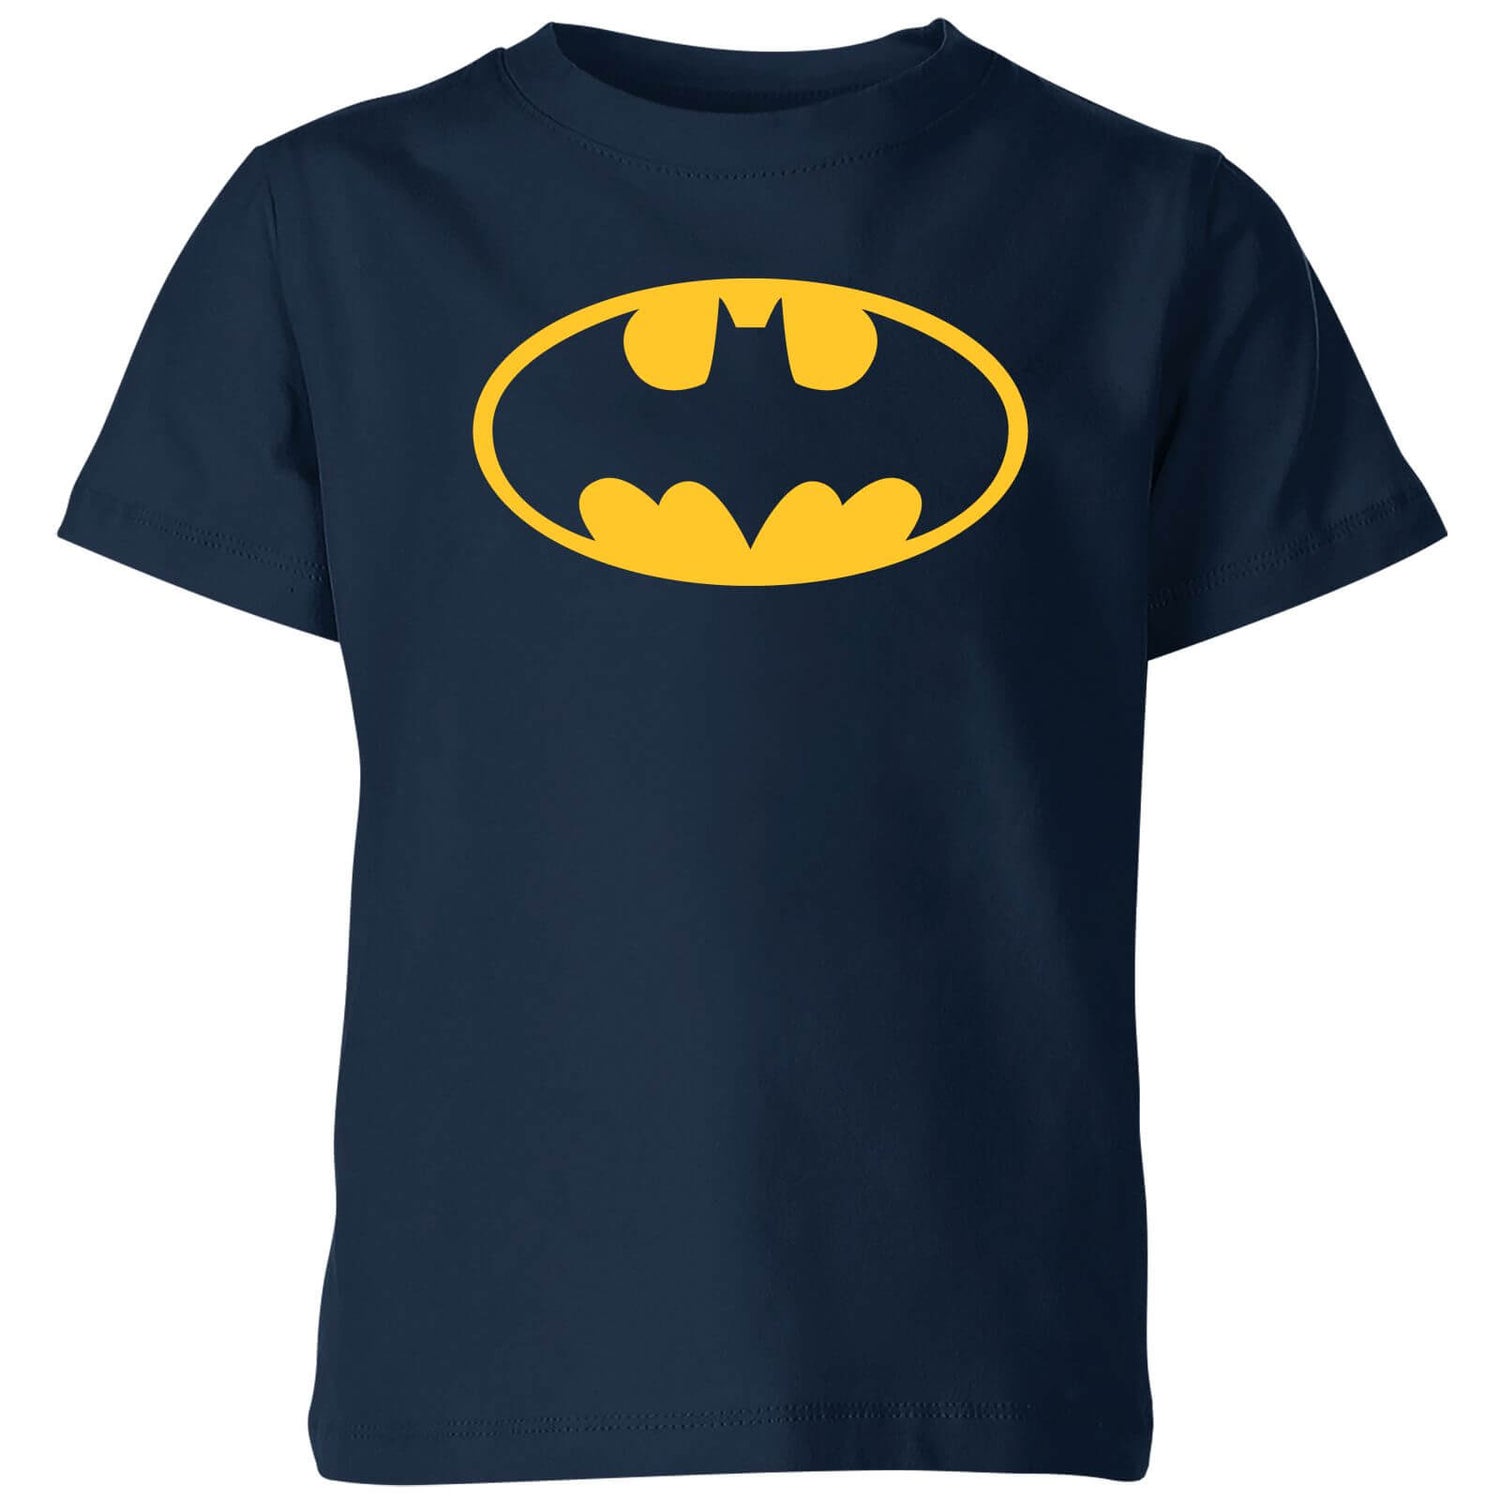 Justice League Batman Logo Kids' T-Shirt - Navy